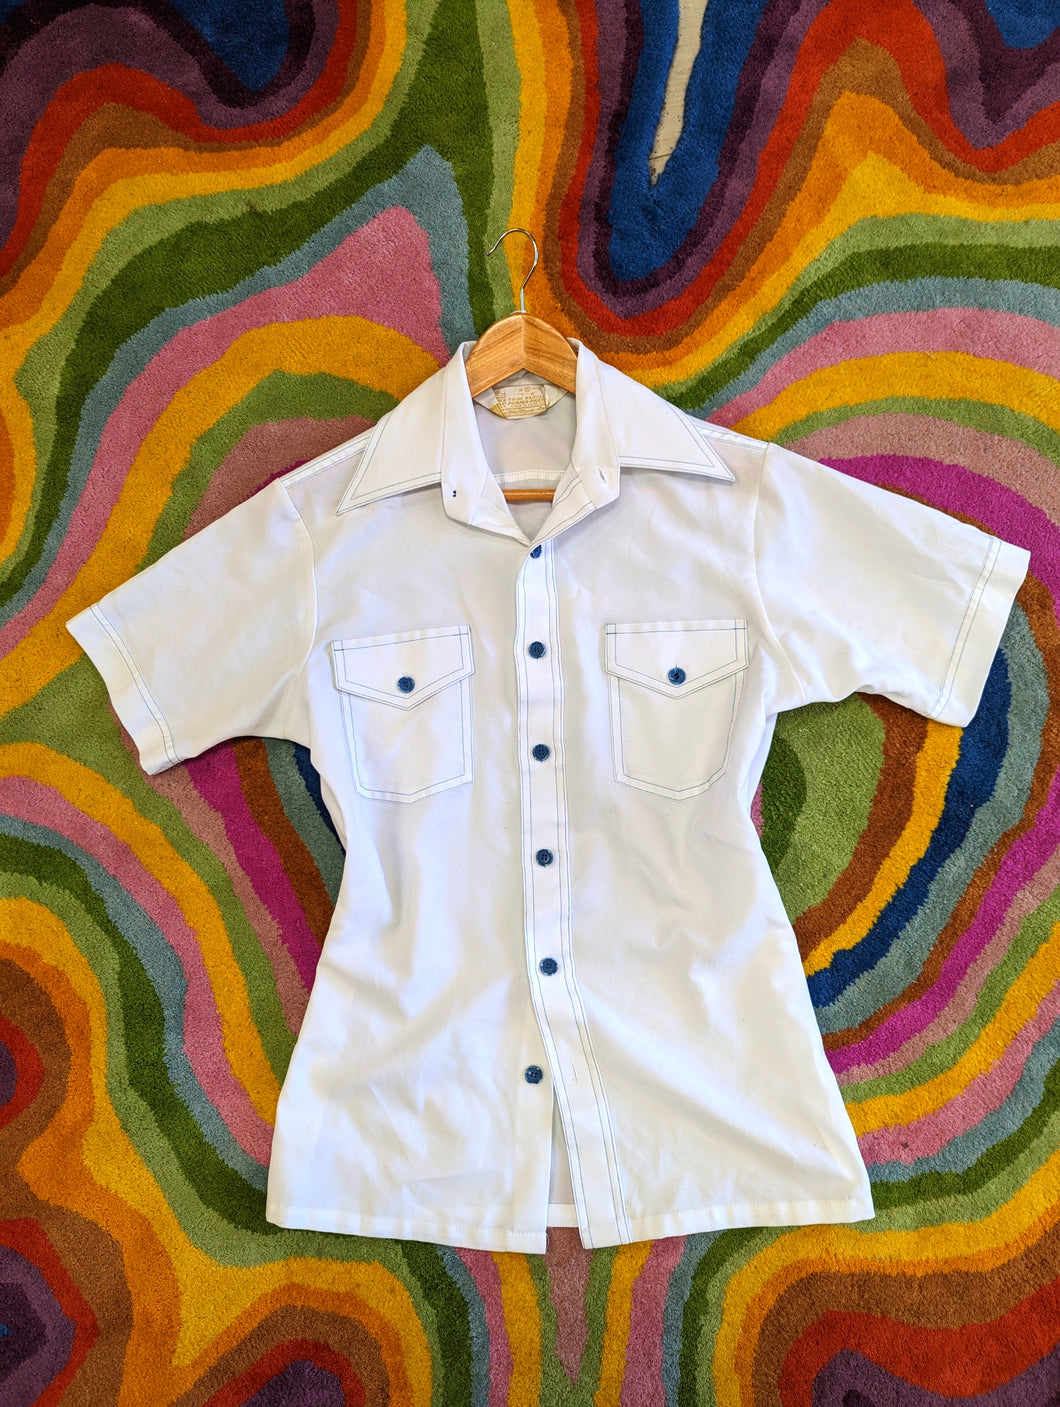 Vintage Unisex White Collared Shirt SM/M